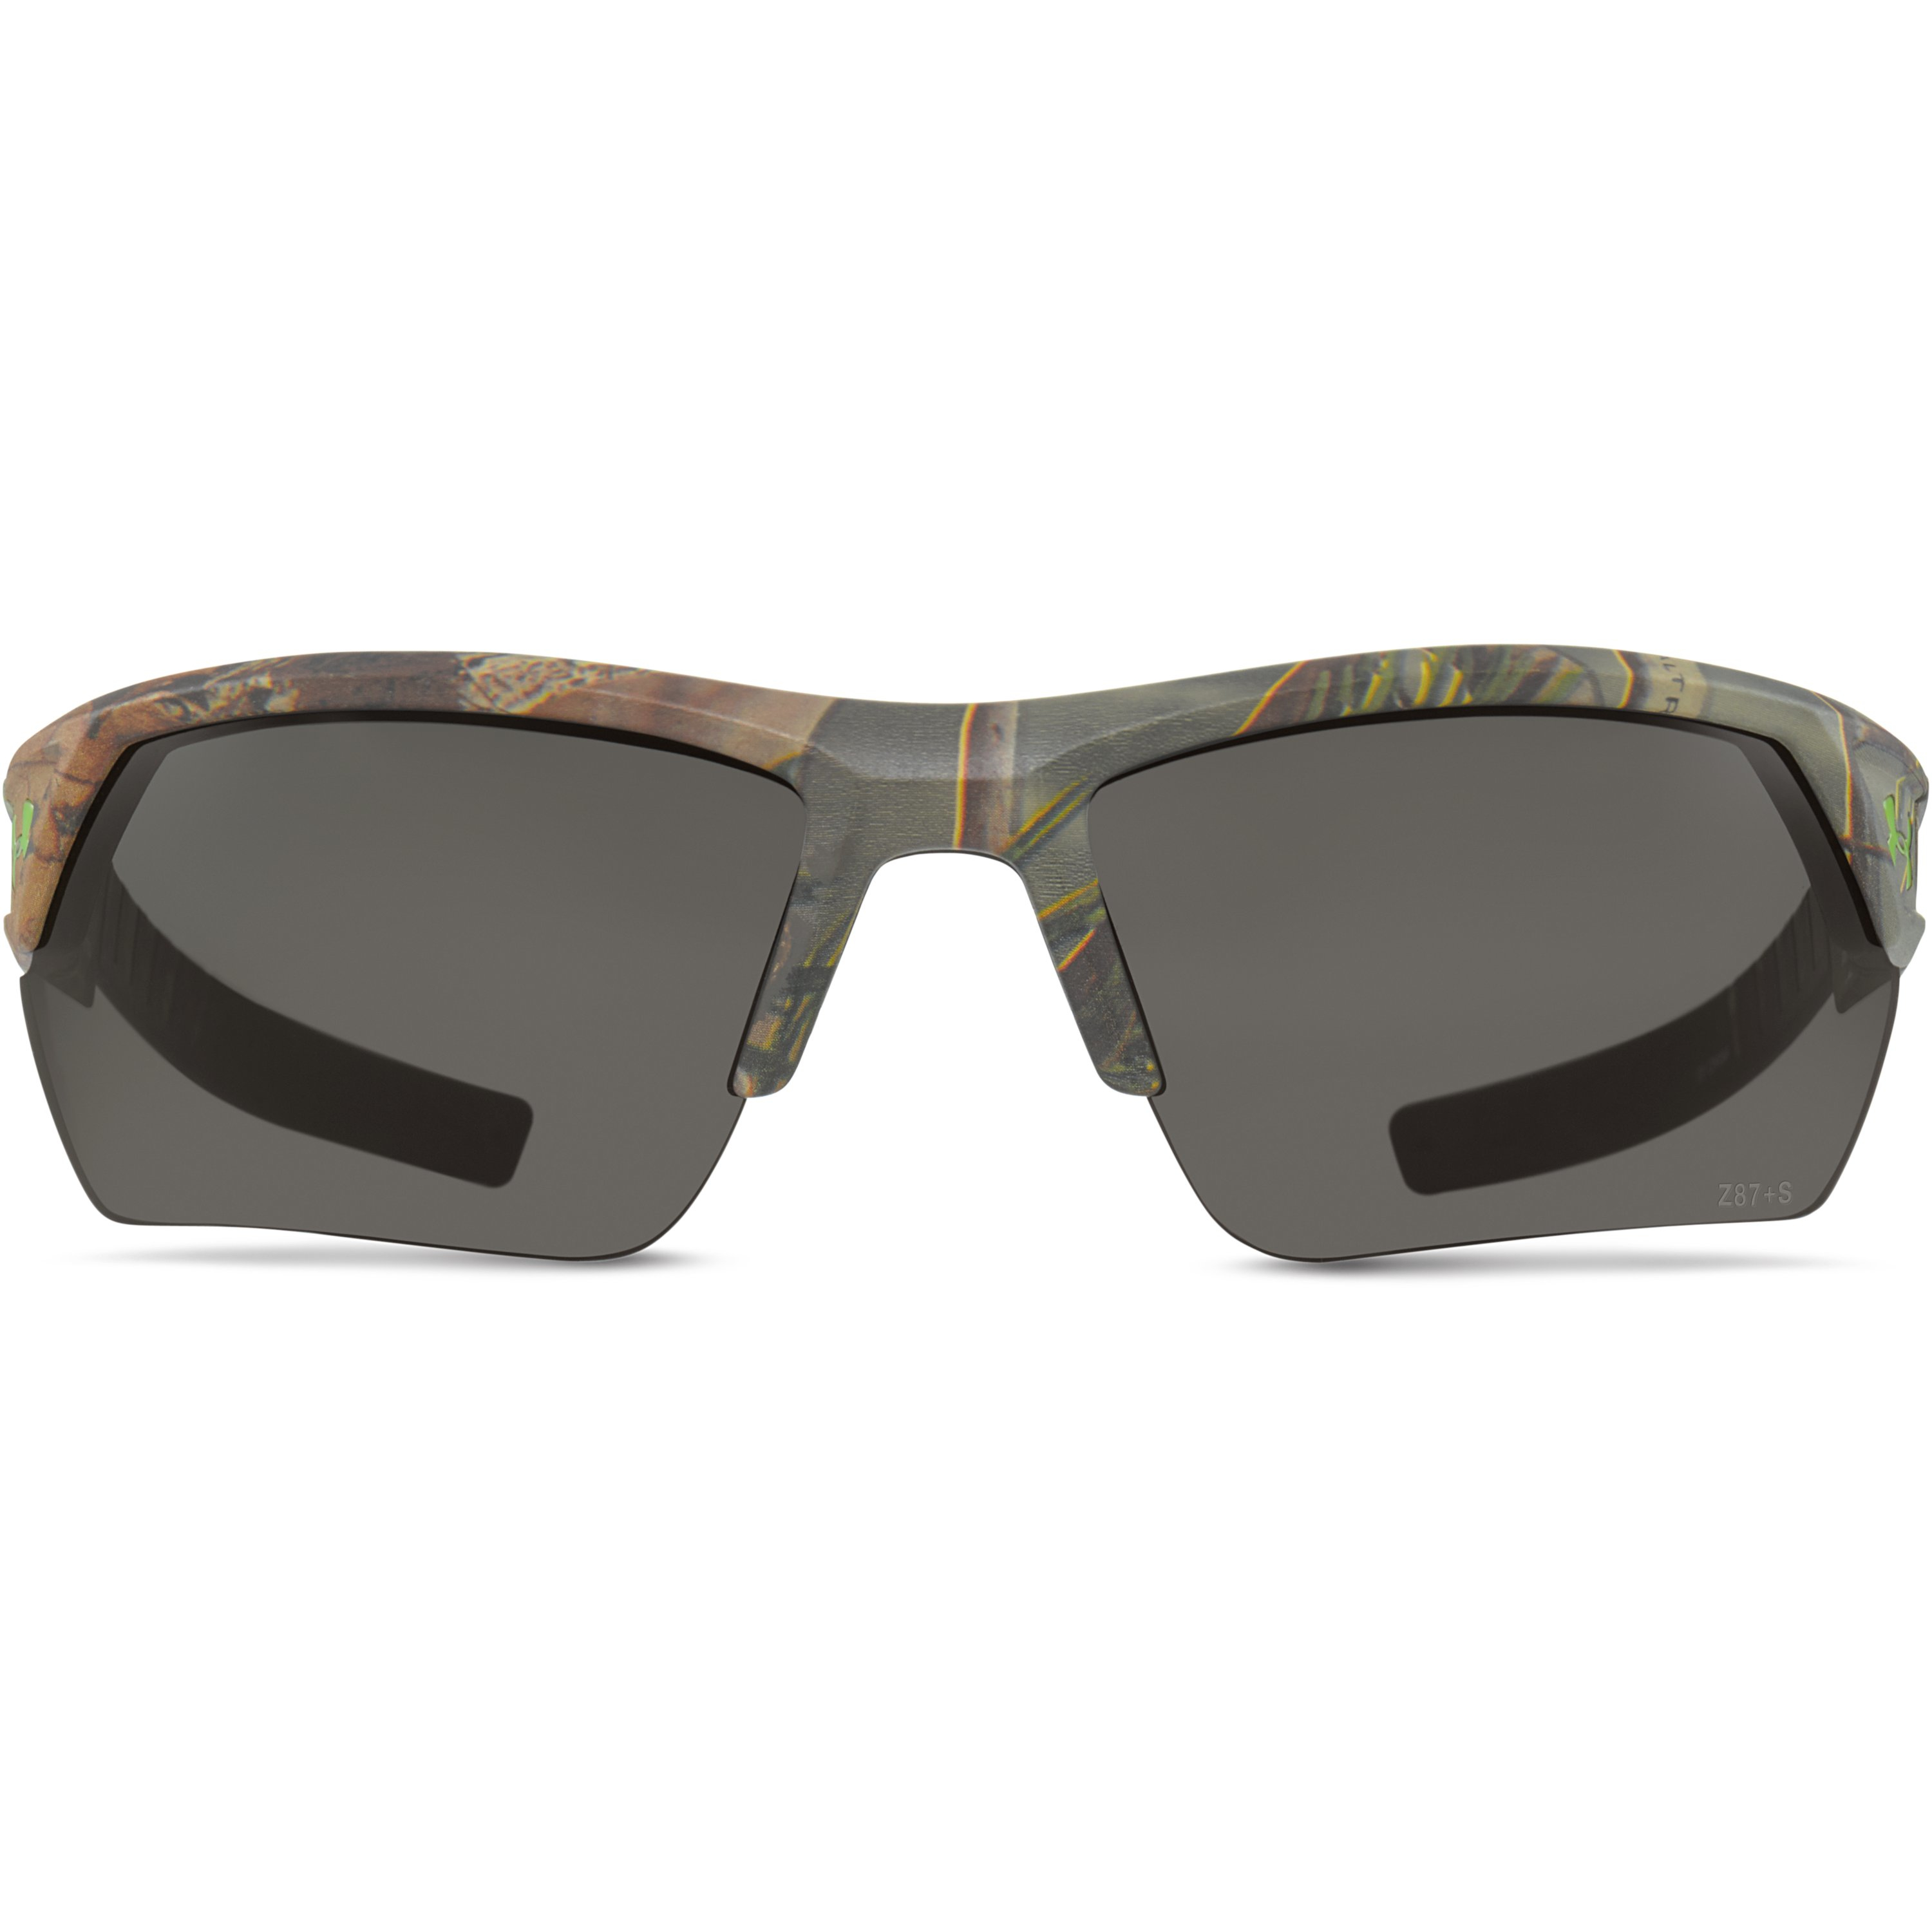 Under Armour Ua Igniter 2.0 Camo Sunglasses for Men | Lyst